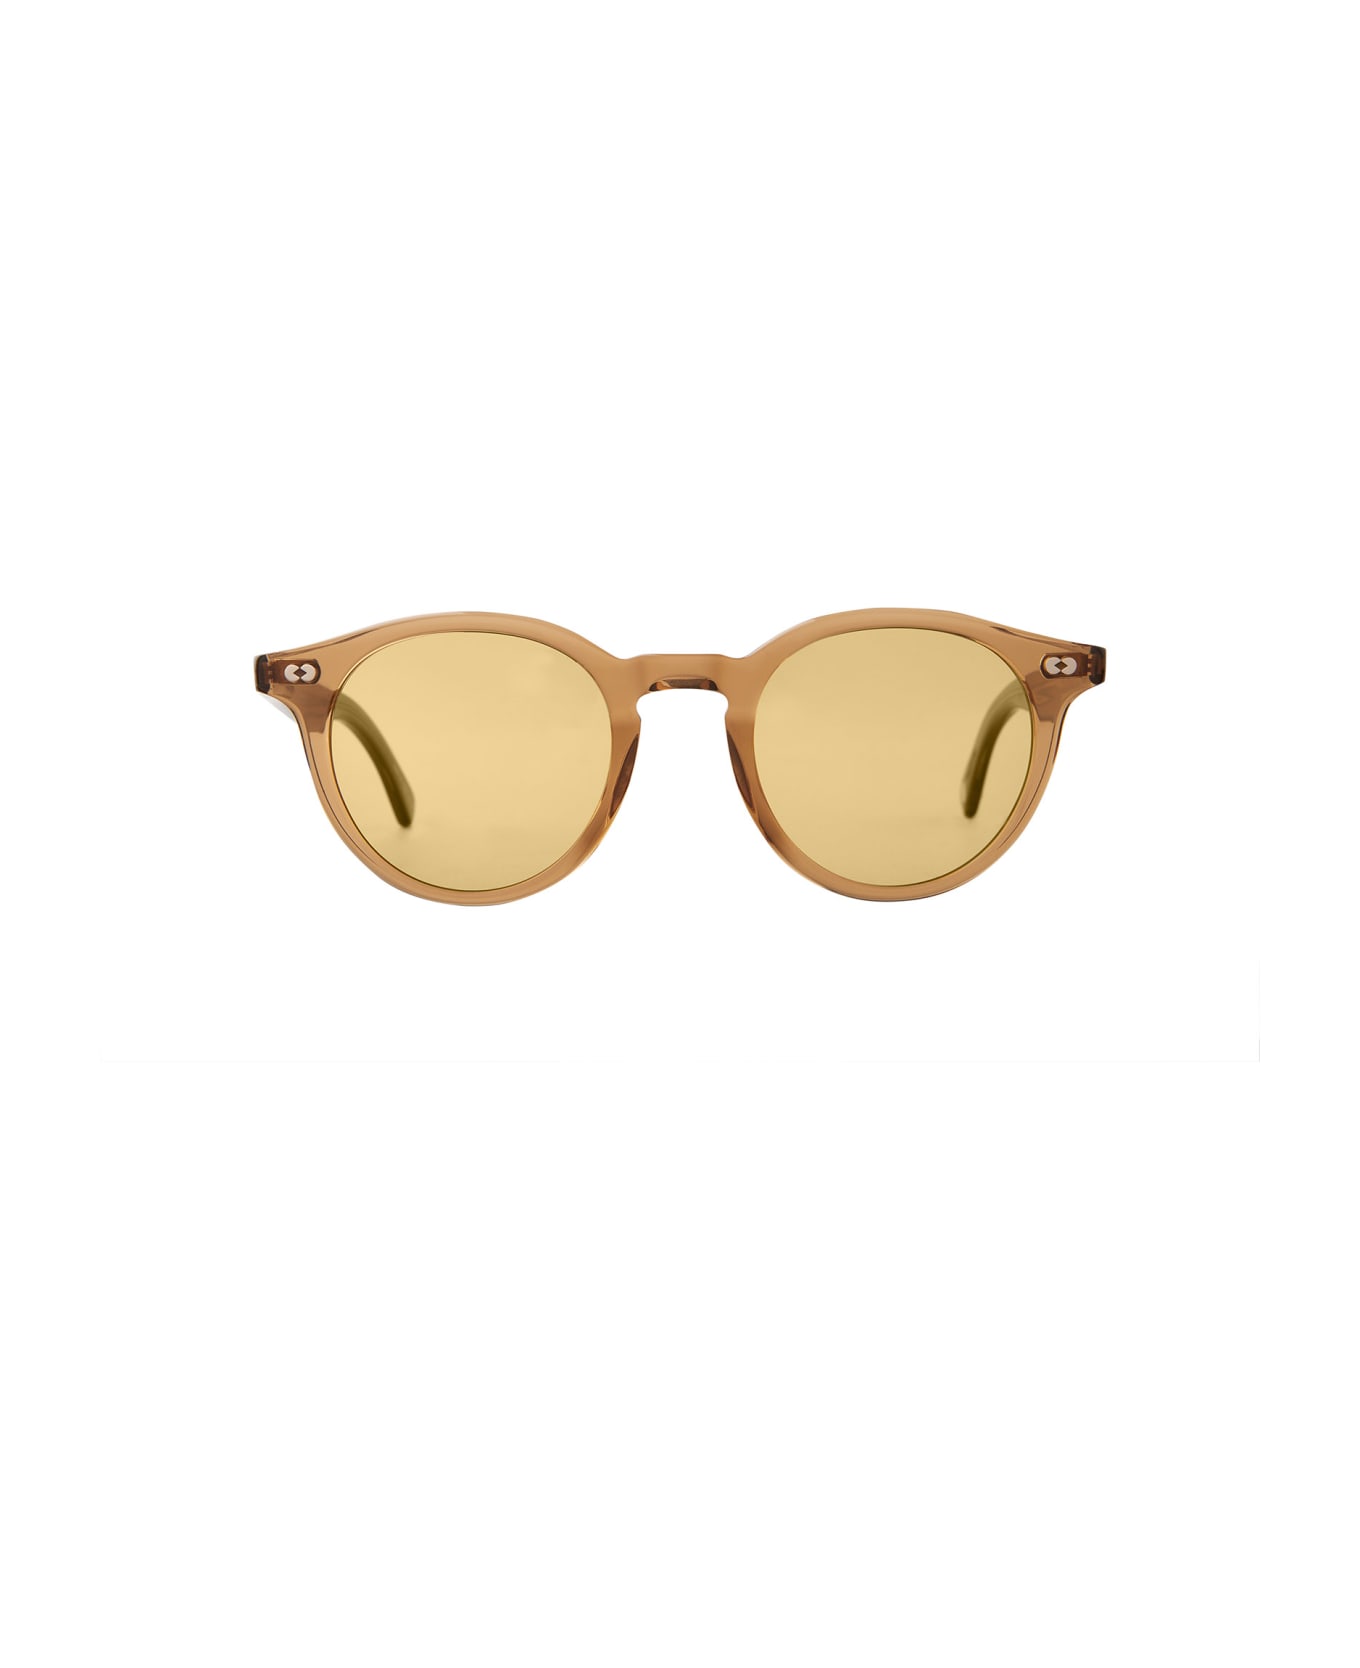 Garrett Leight Clune X Sun Caramel Sunglasses - Caramel